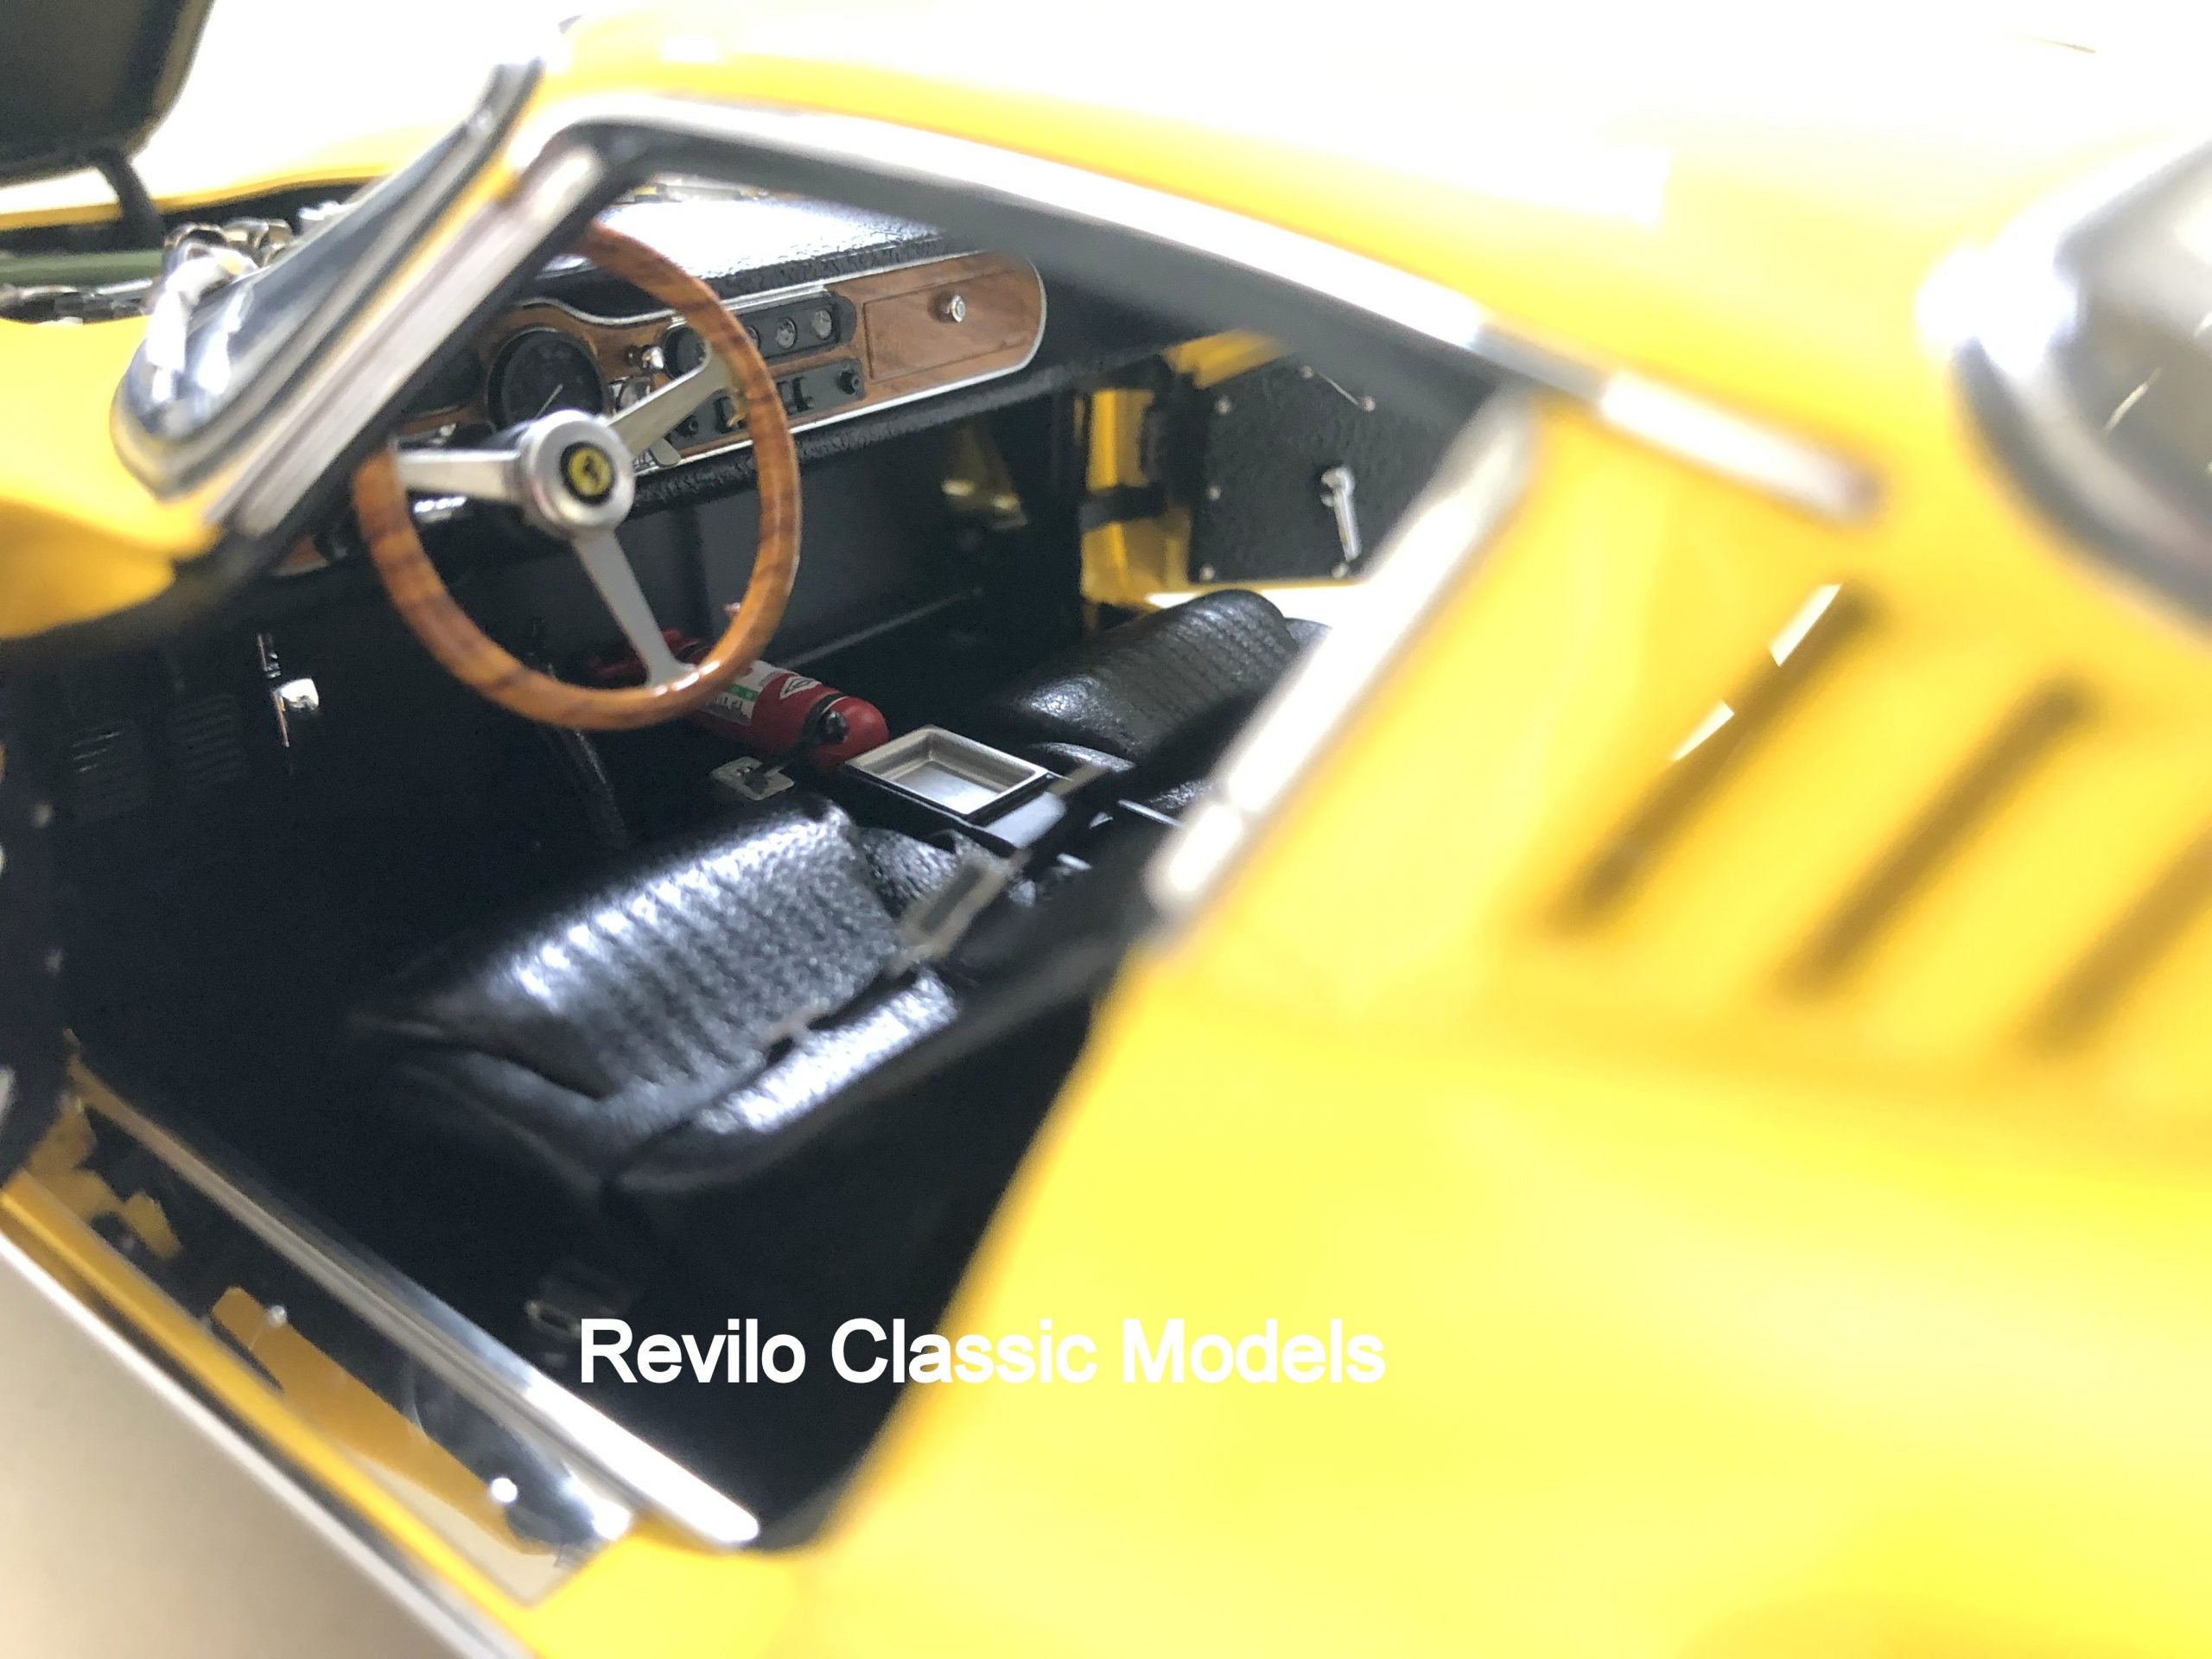 CMC M240 1:18 Ferrari 275 GTB/C Modena Yellow Limited Edition